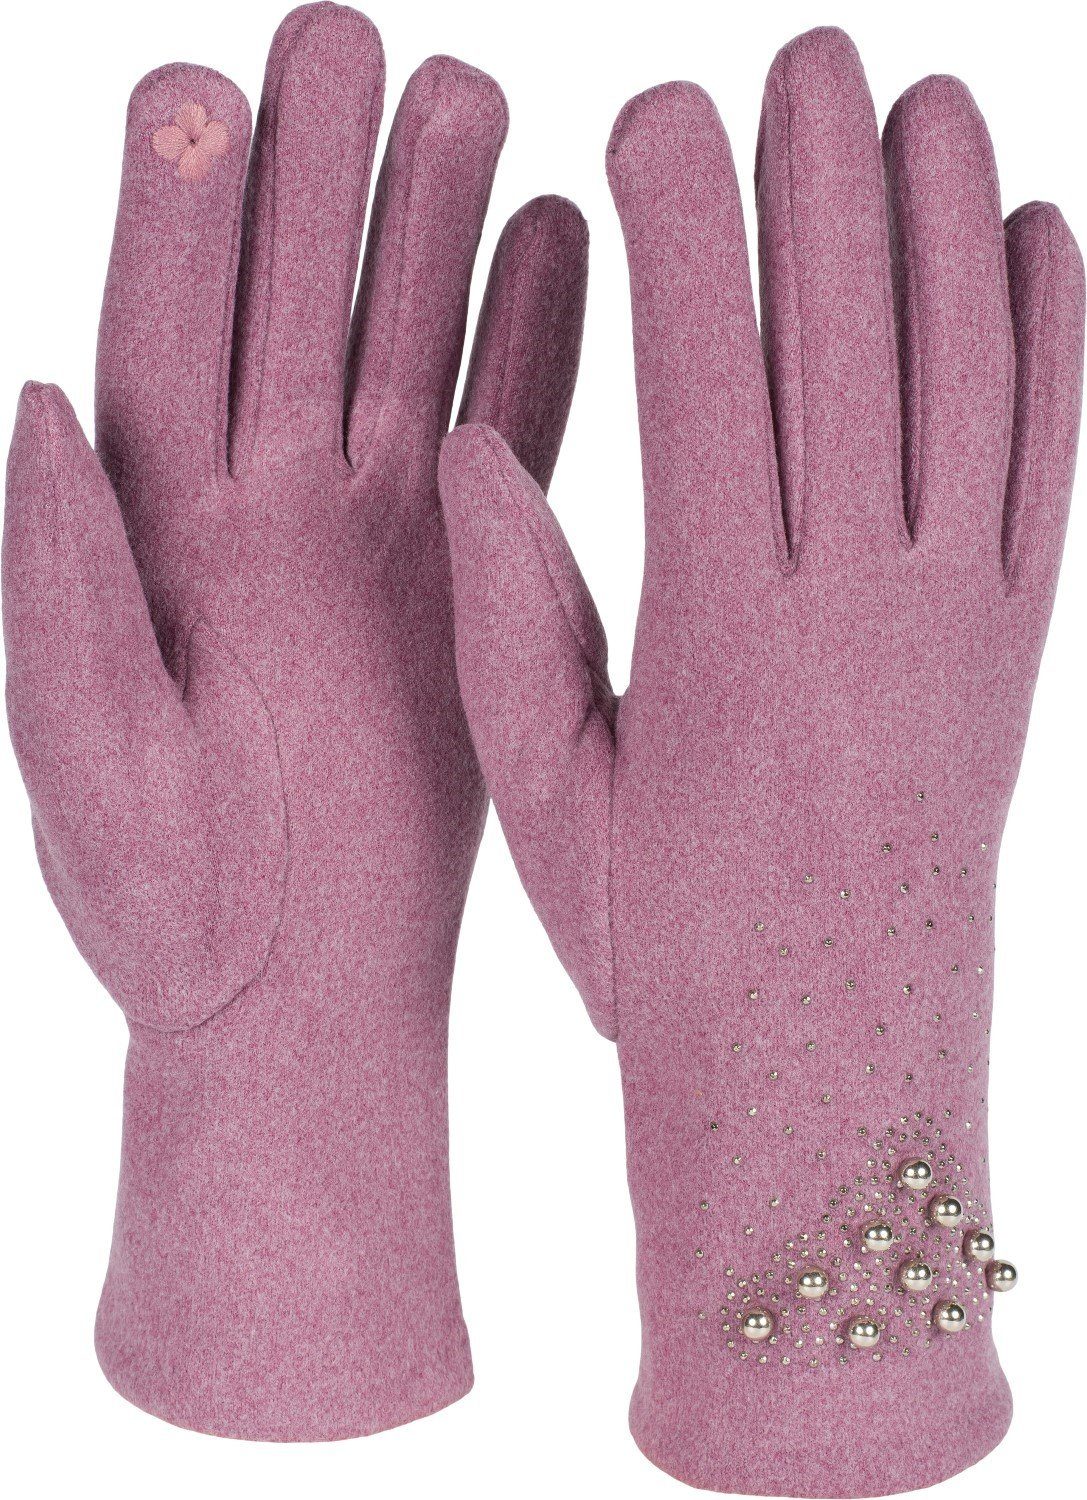 styleBREAKER Fleecehandschuhe Touchscreen Handschuhe mit Strass und Perlen Mauve